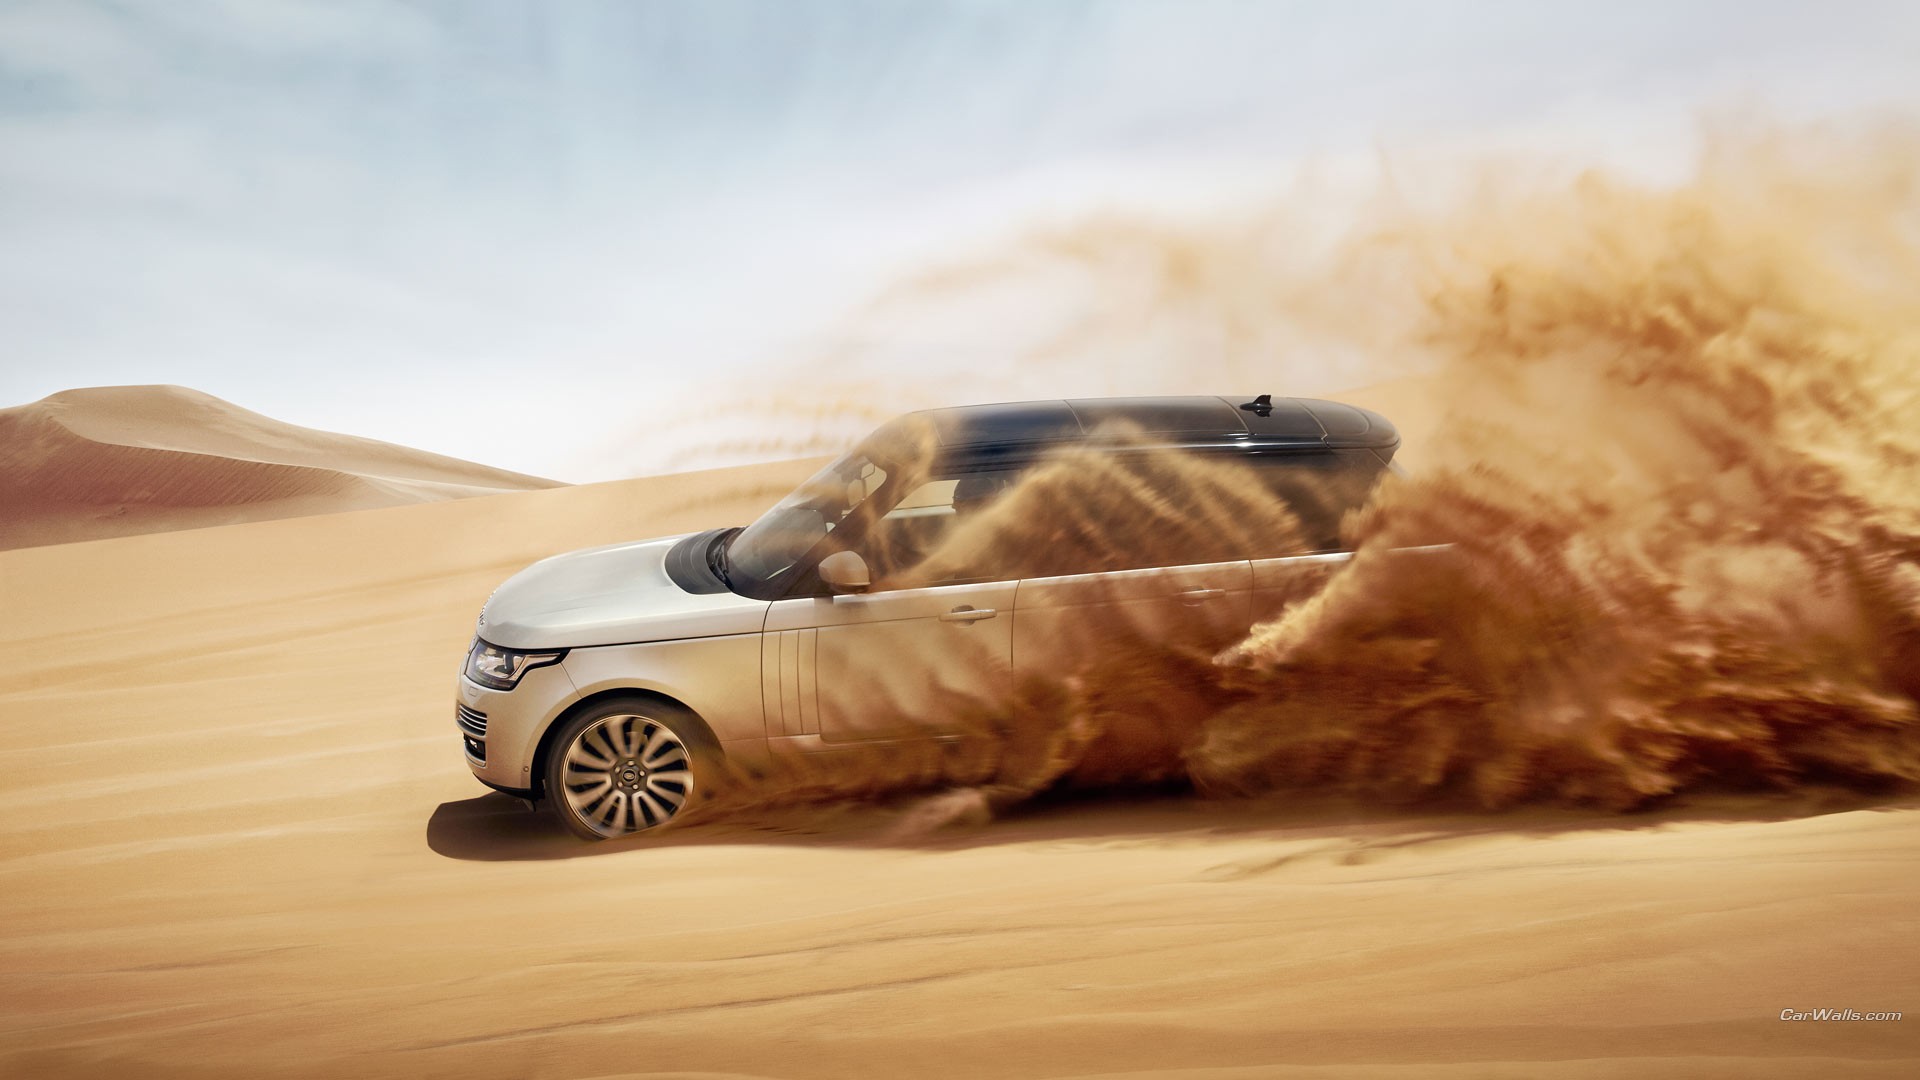 General 1920x1080 Range Rover car desert dunes vehicle Land Rover watermarked offroad British cars SUV